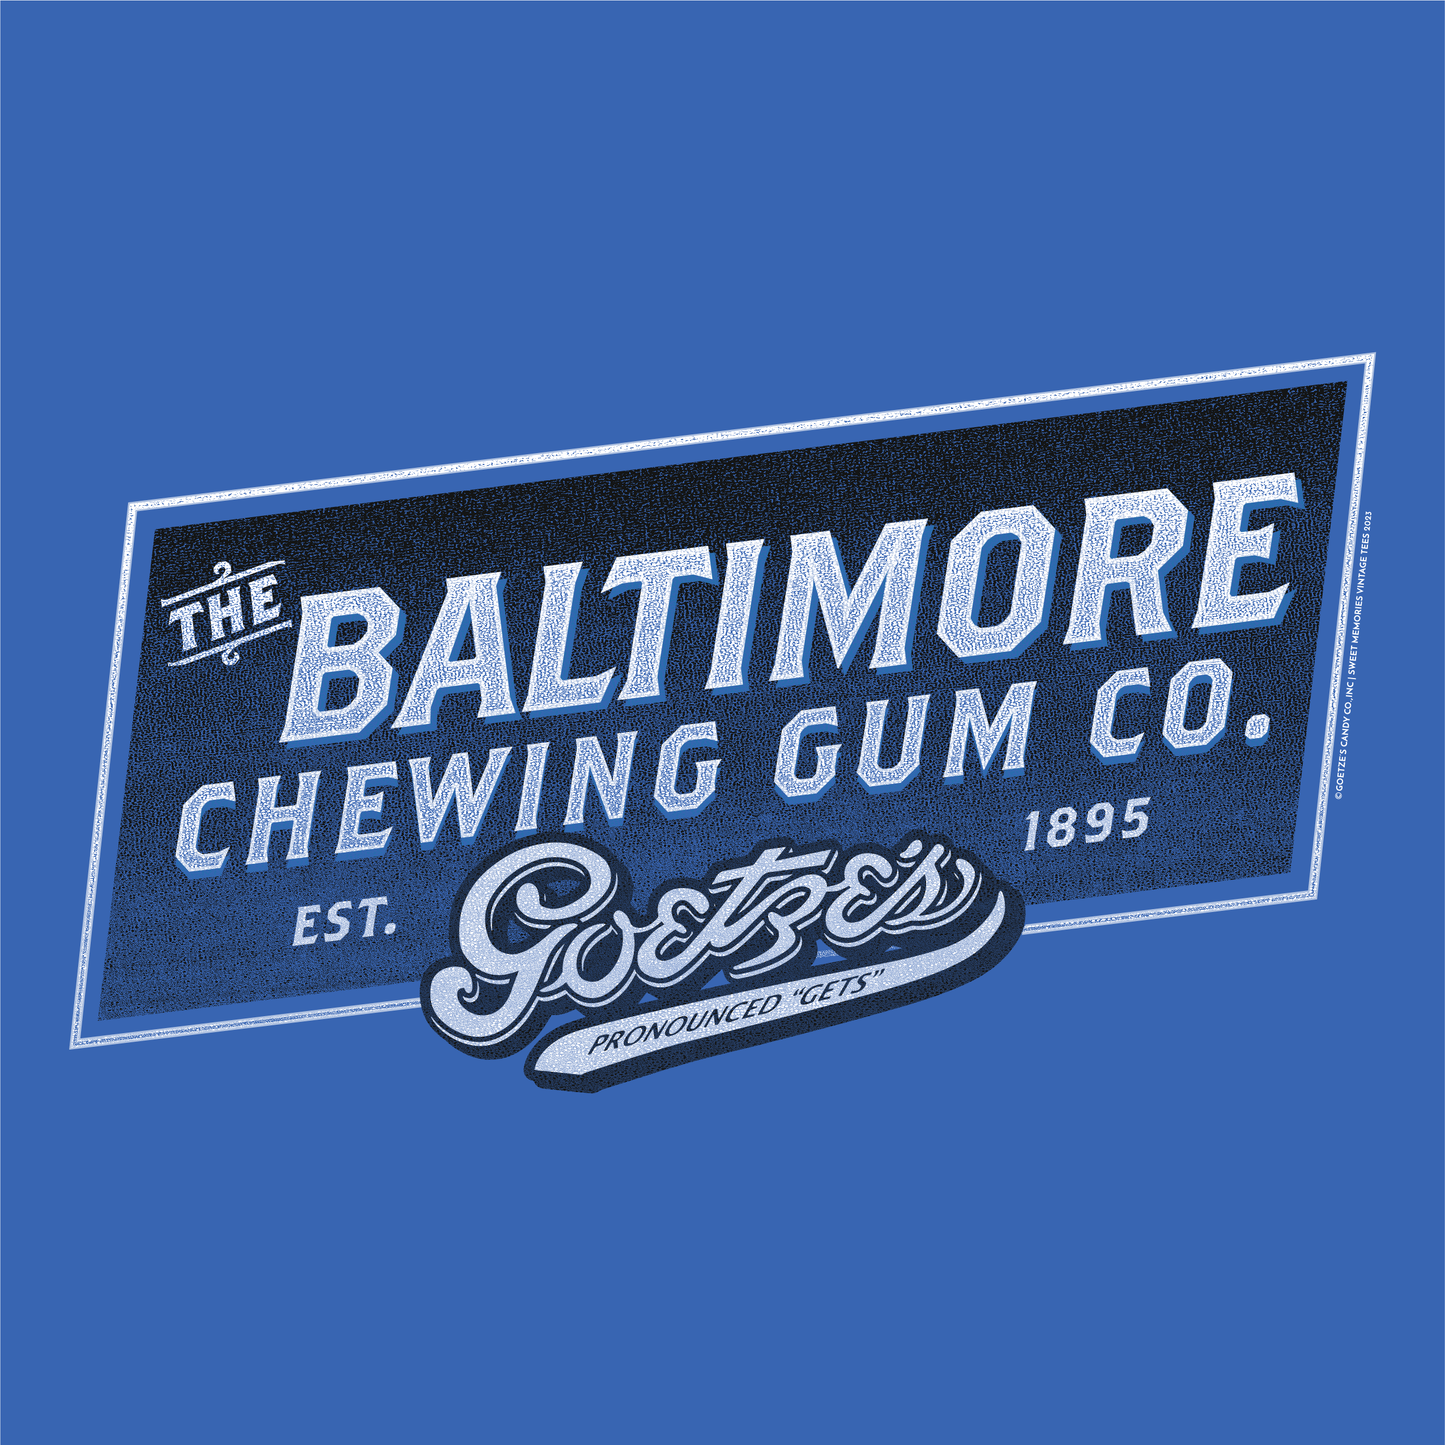 Goetze's Baltimore Chewing Gum Co. Since 1895 Tee